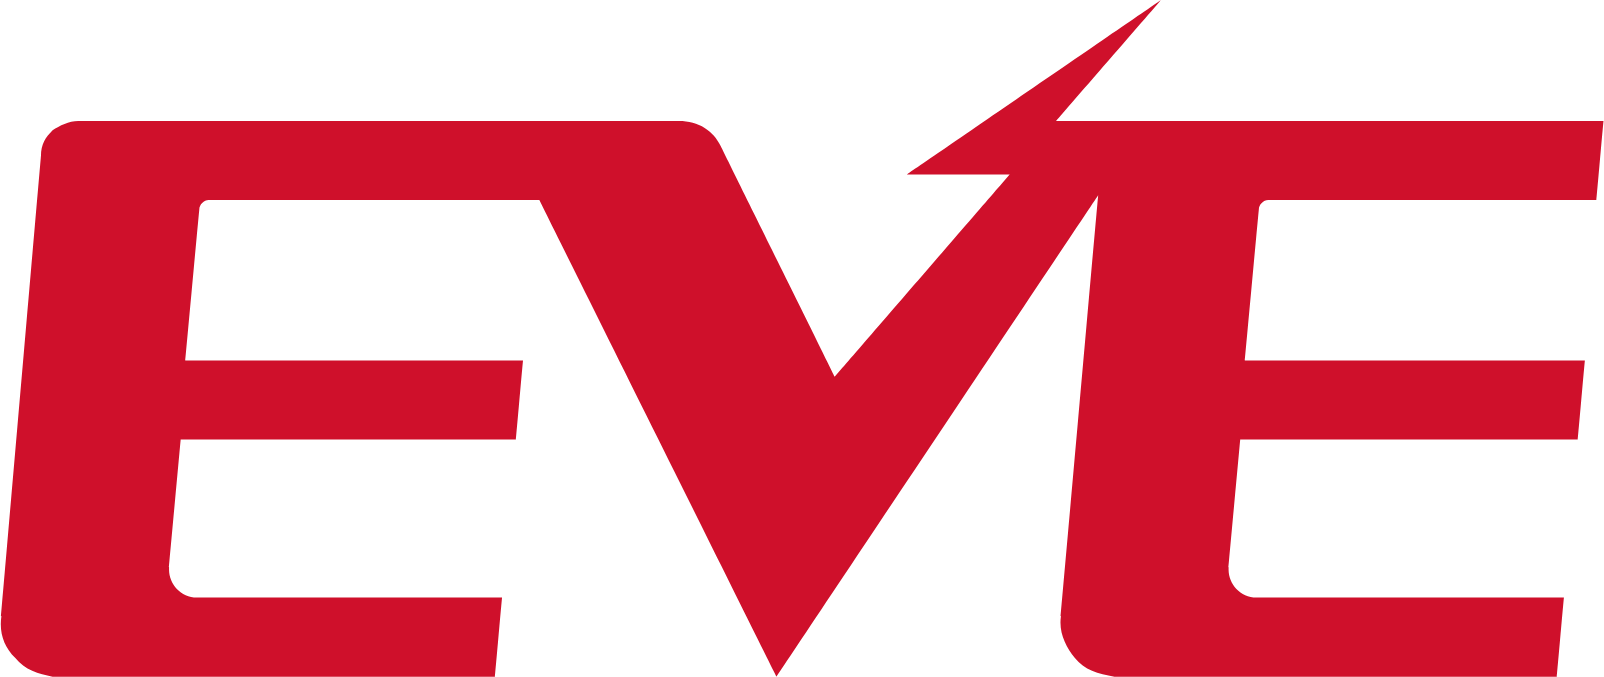 EVE Energy logo (transparent PNG)